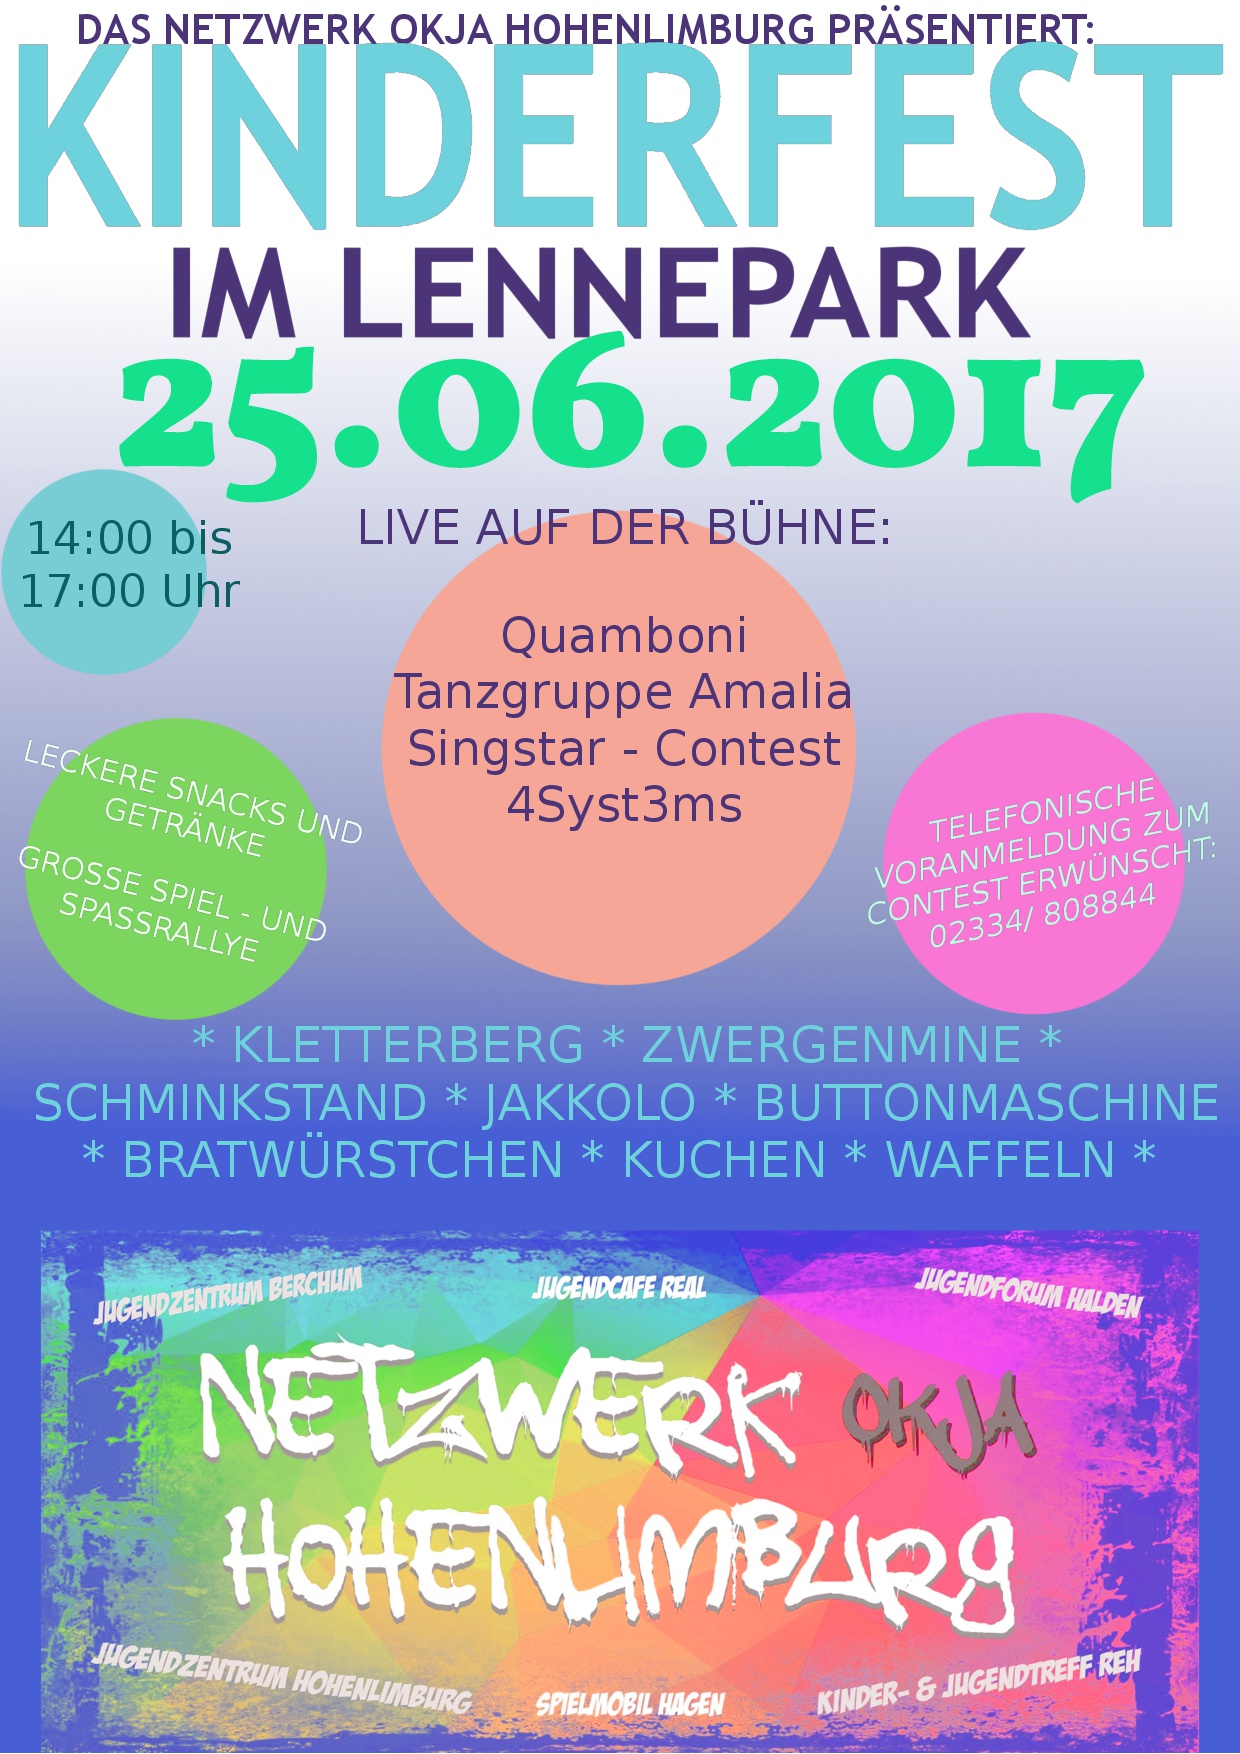 Kinderfest im Lennepark Hohenlimburg